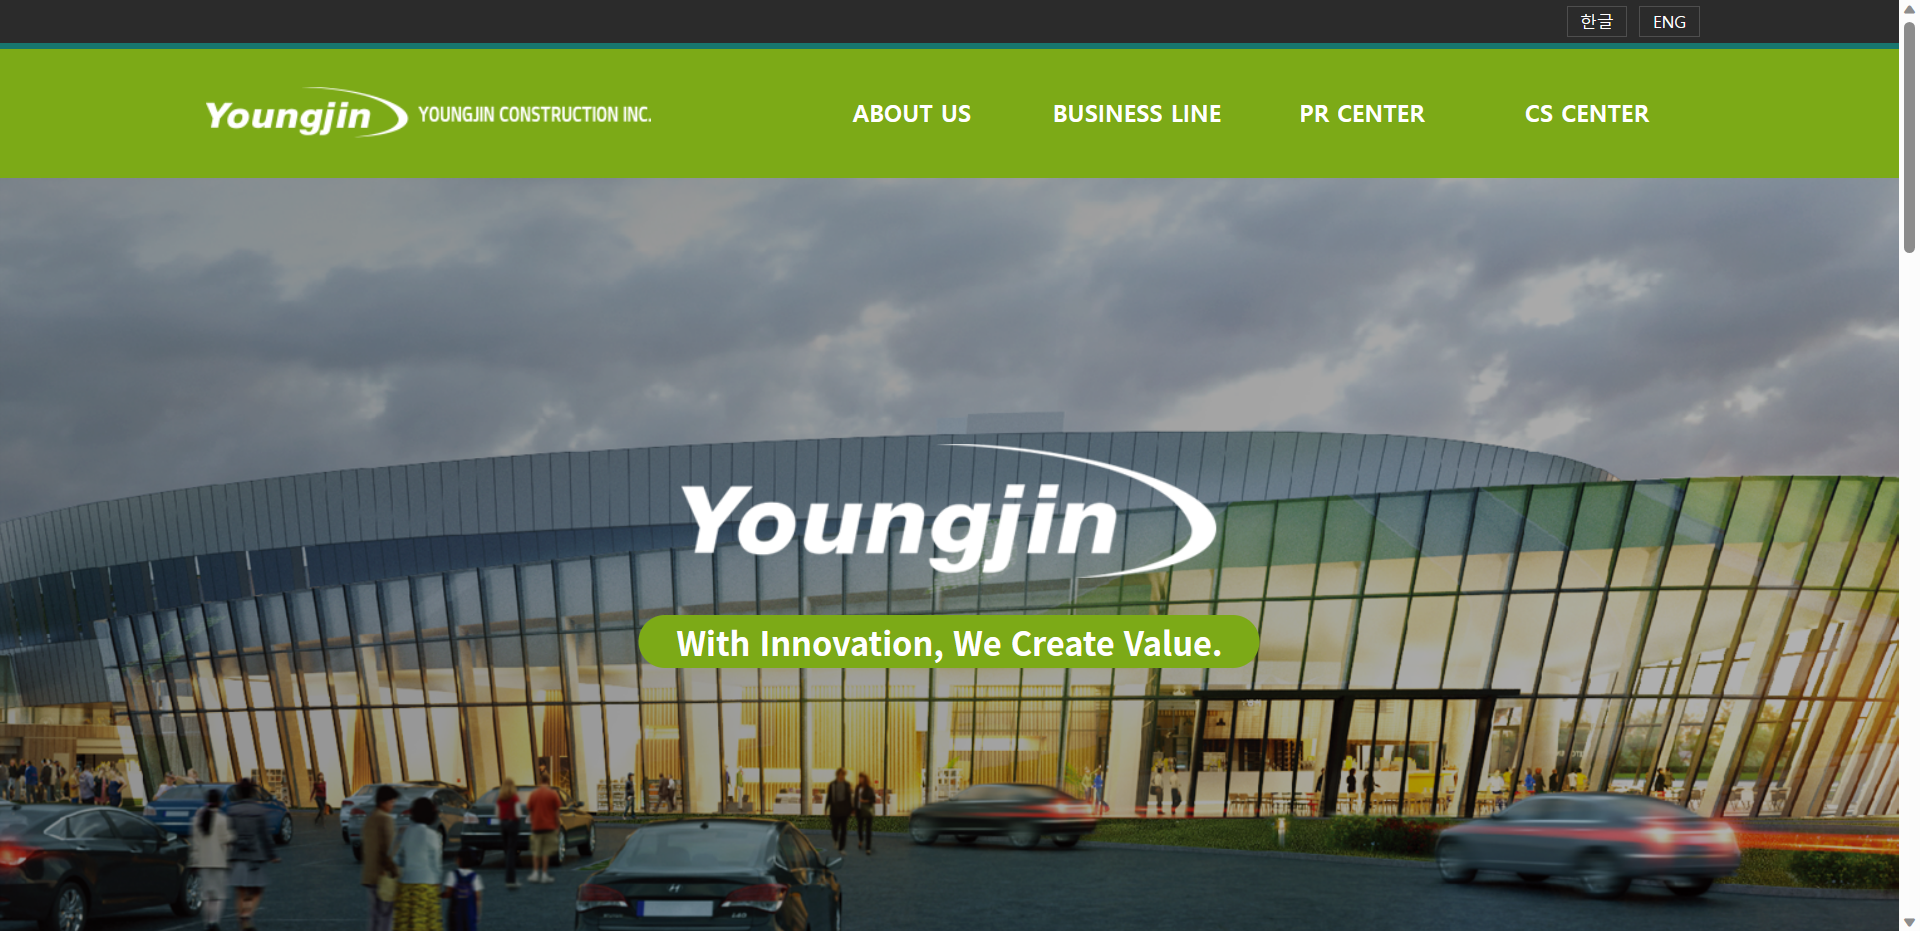 Youngjin Construction INC. website